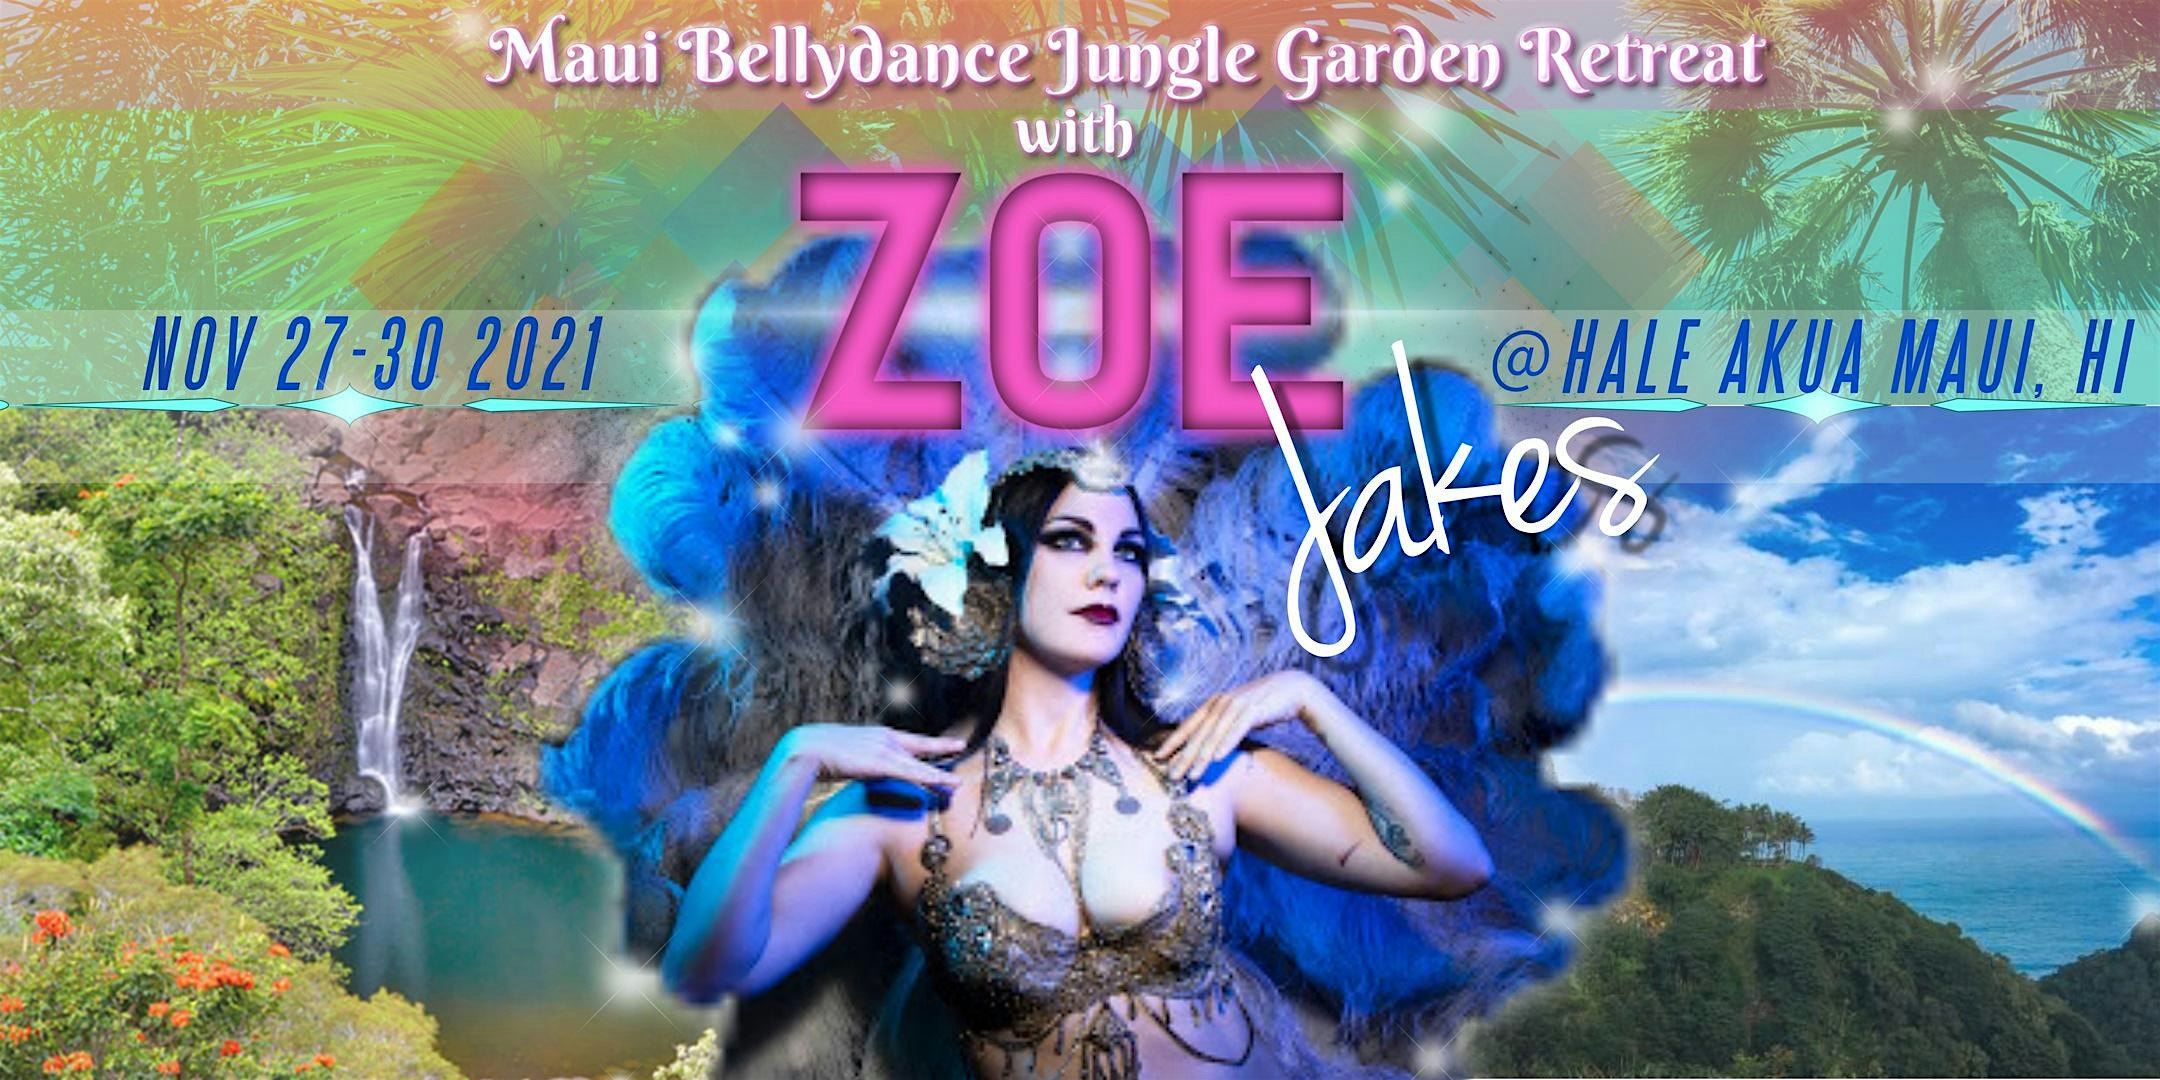 Maui Bellydance Jungle Garden Retreat with Zoe Jakes